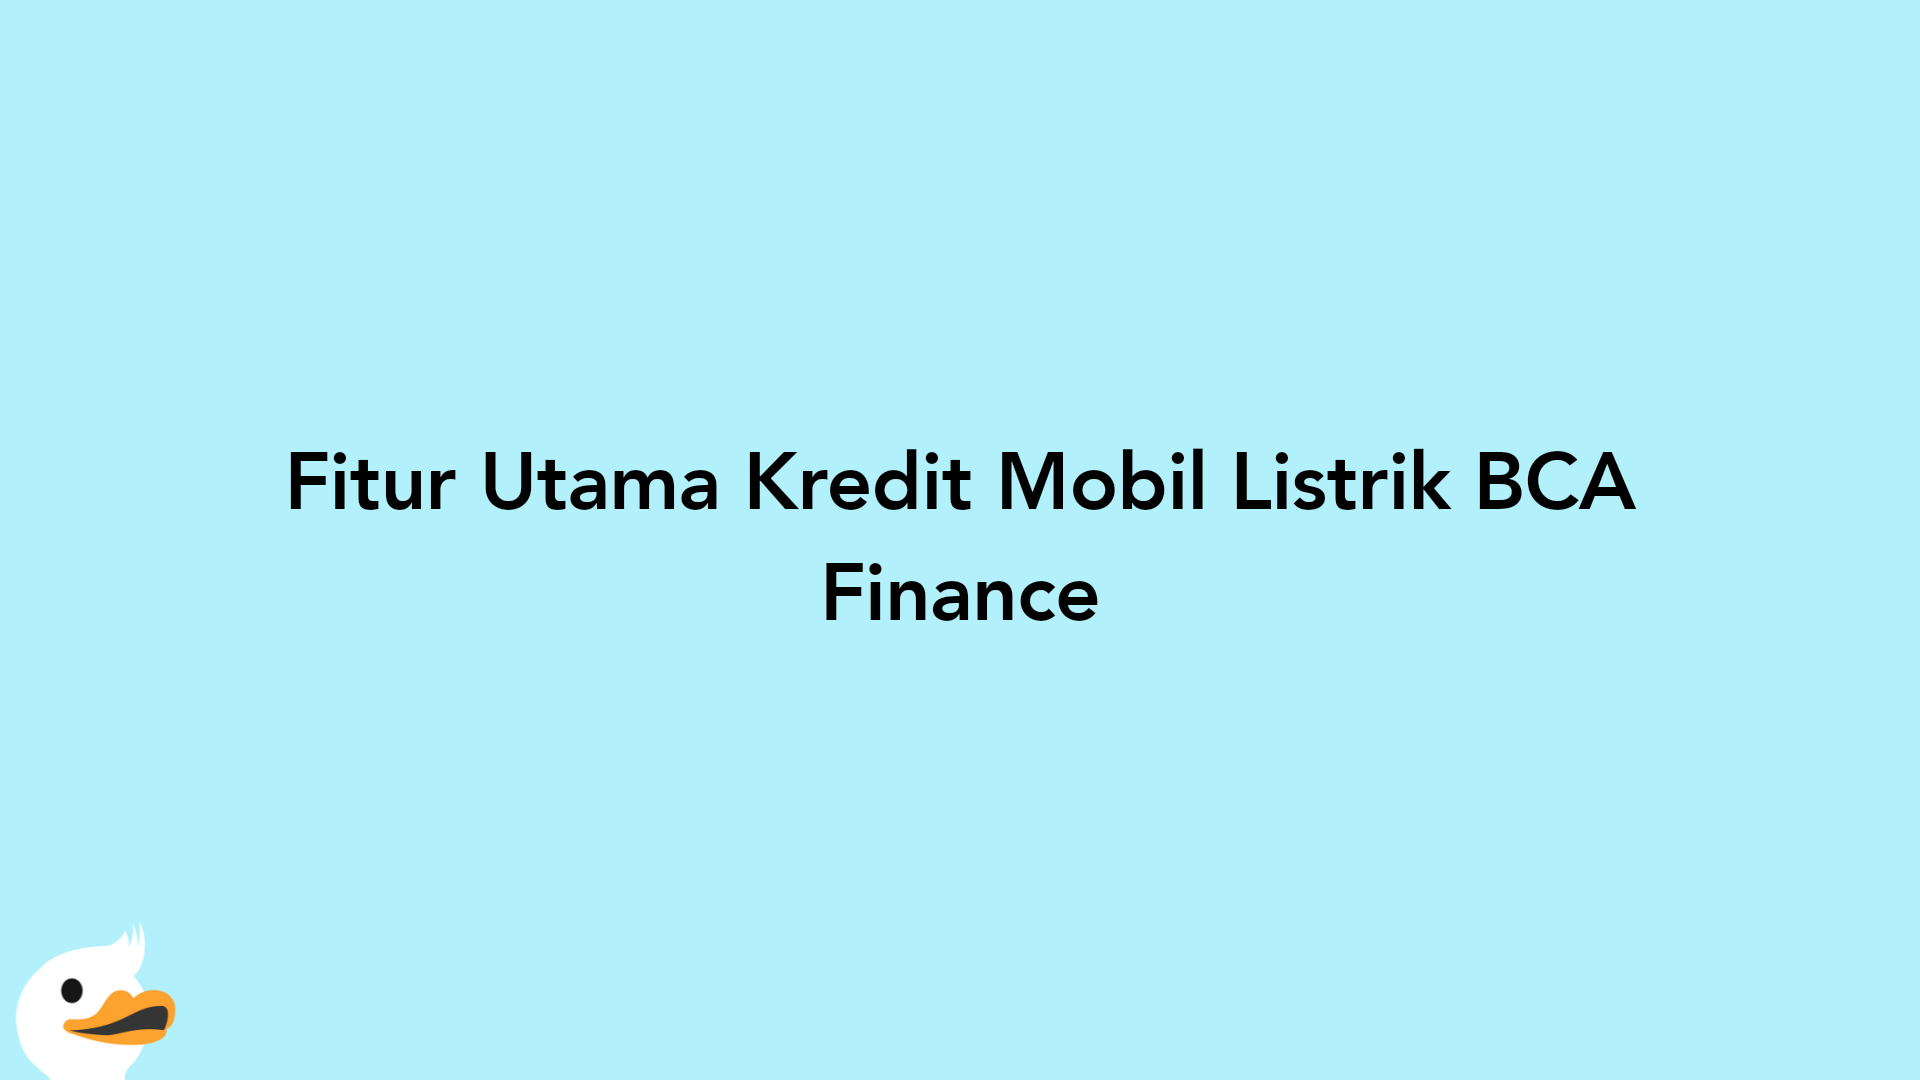 Fitur Utama Kredit Mobil Listrik BCA Finance